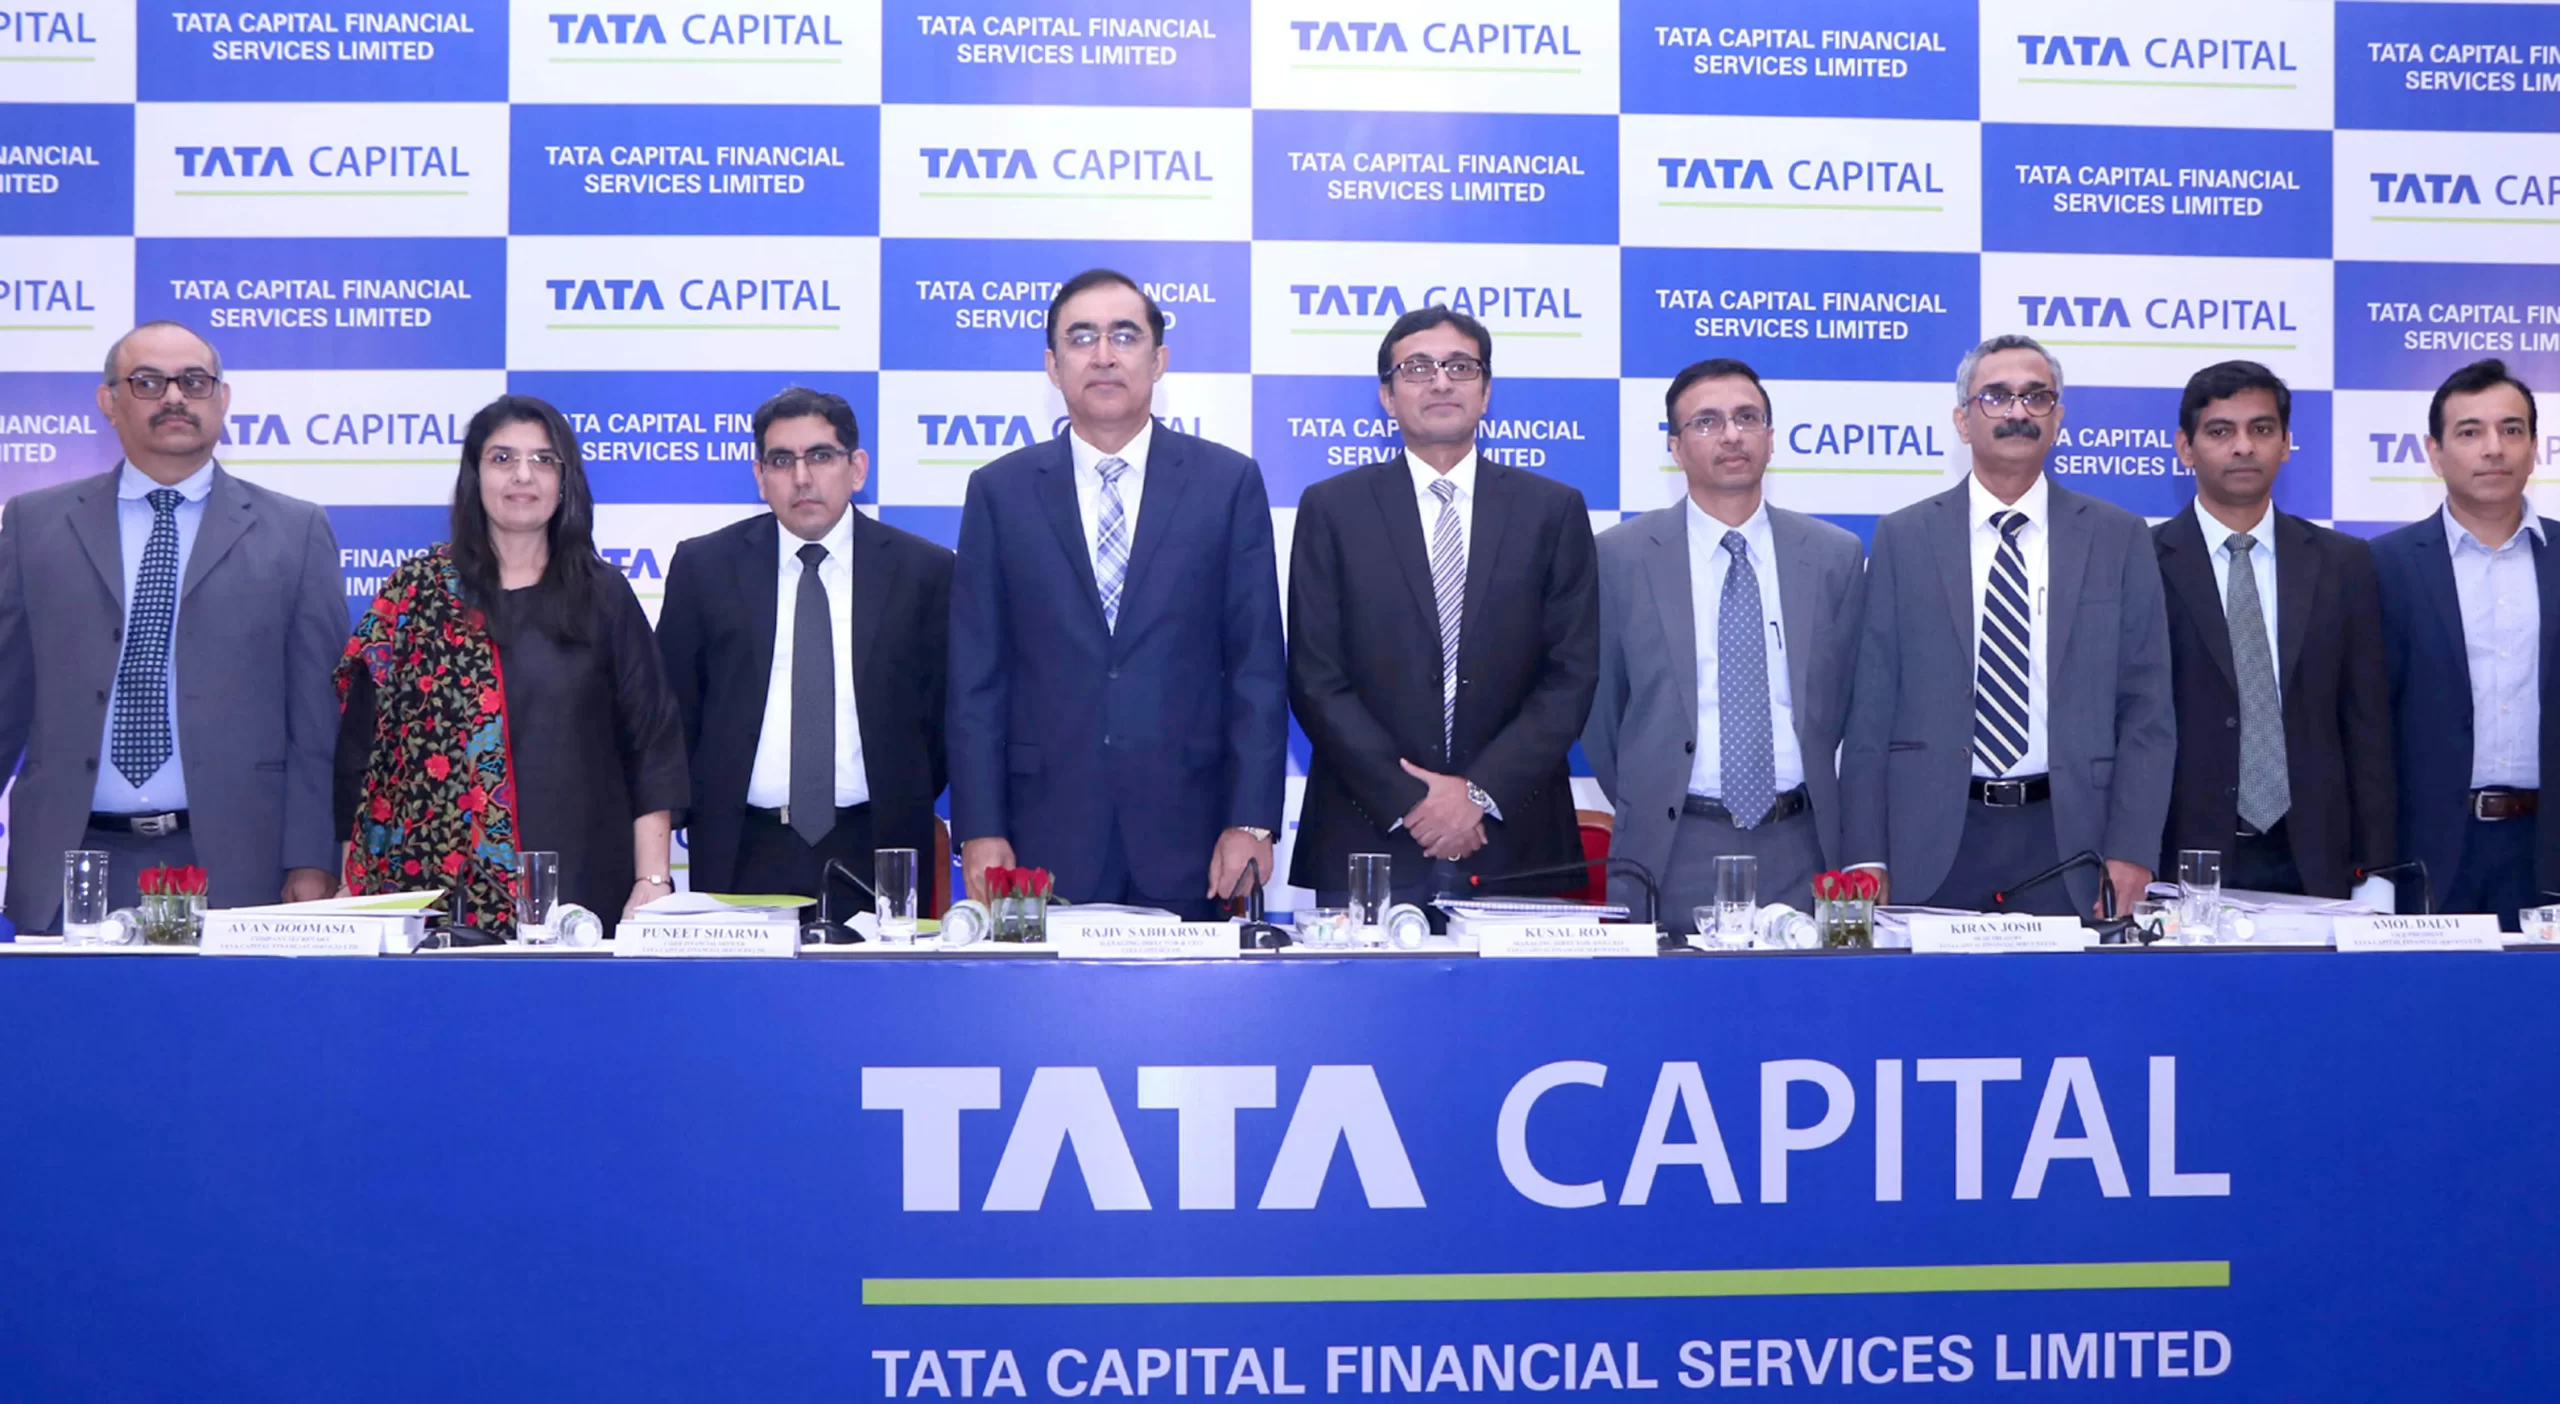 Tata Capital Unlisted Share Price